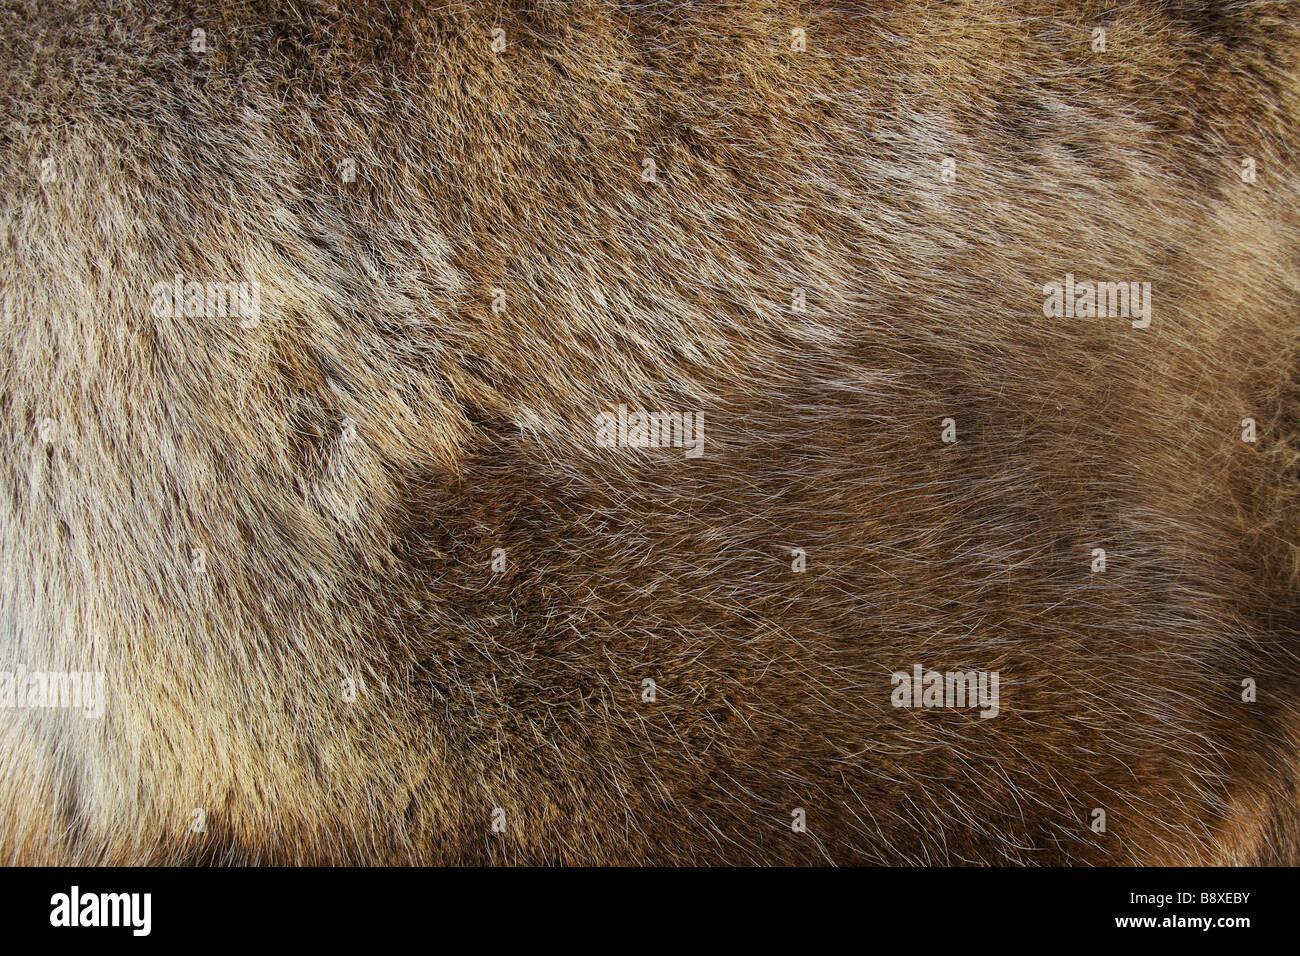 Reindeer (Rangifer tarandus), close-up of fur winter coat Stock Photo